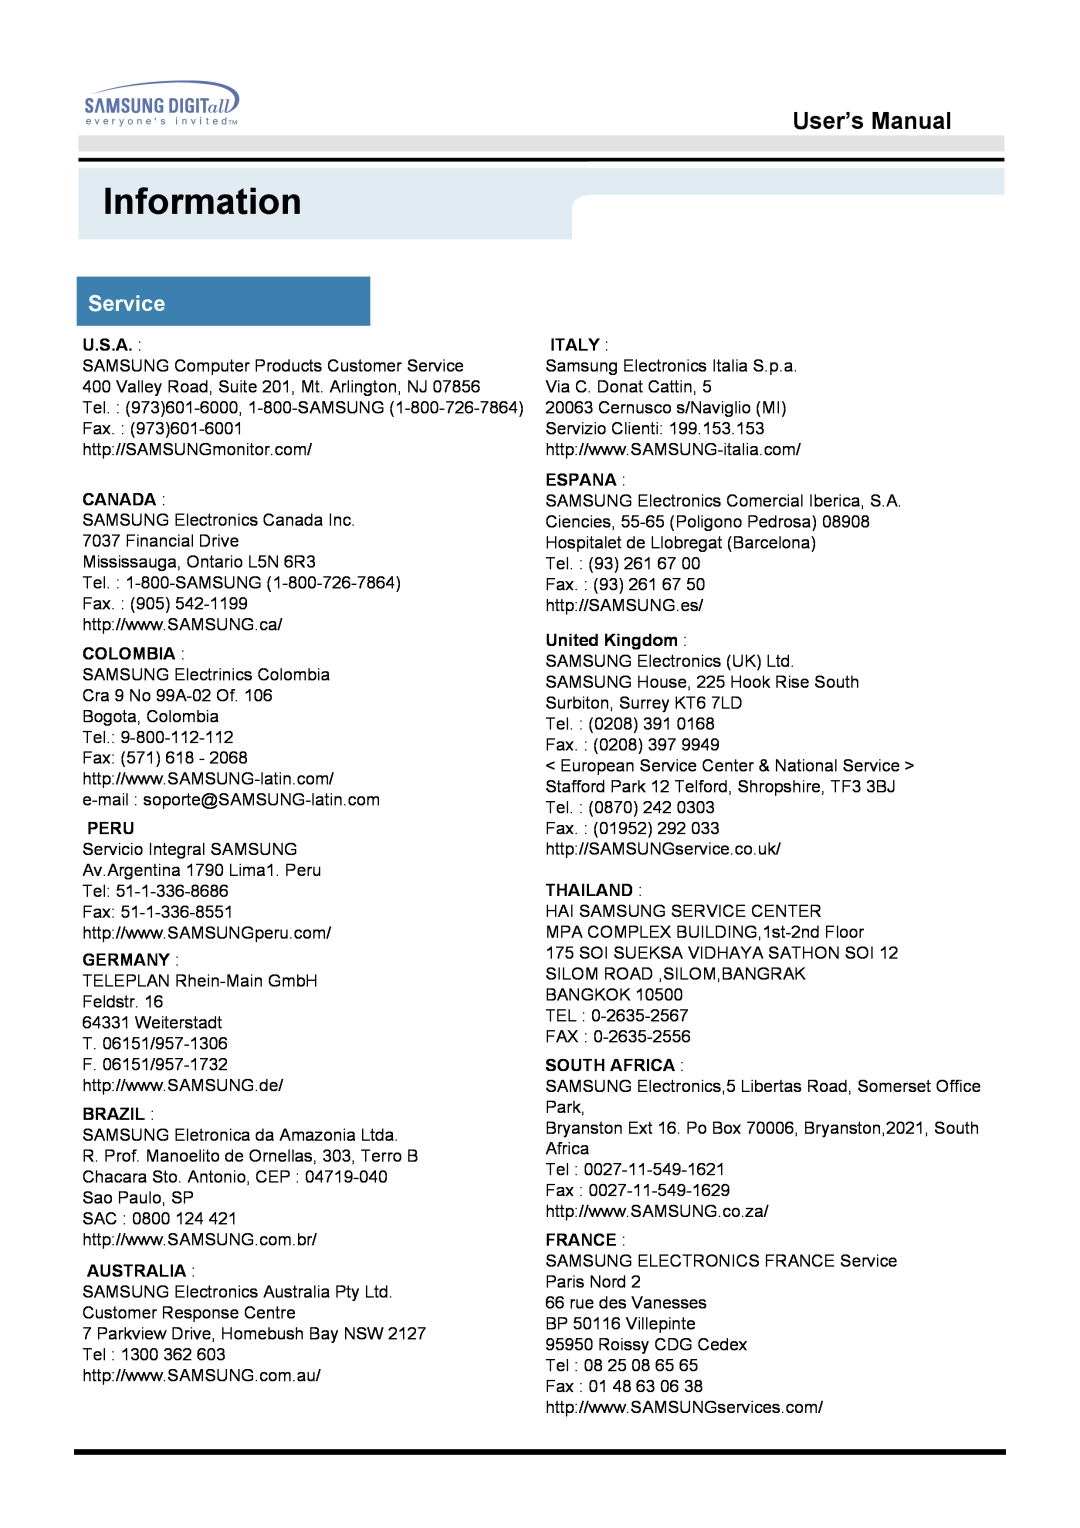 Samsung 151D Information, Service, User’s Manual, U.S.A, Canada, Colombia, Peru, Germany, Brazil, Australia, Italy, Espana 